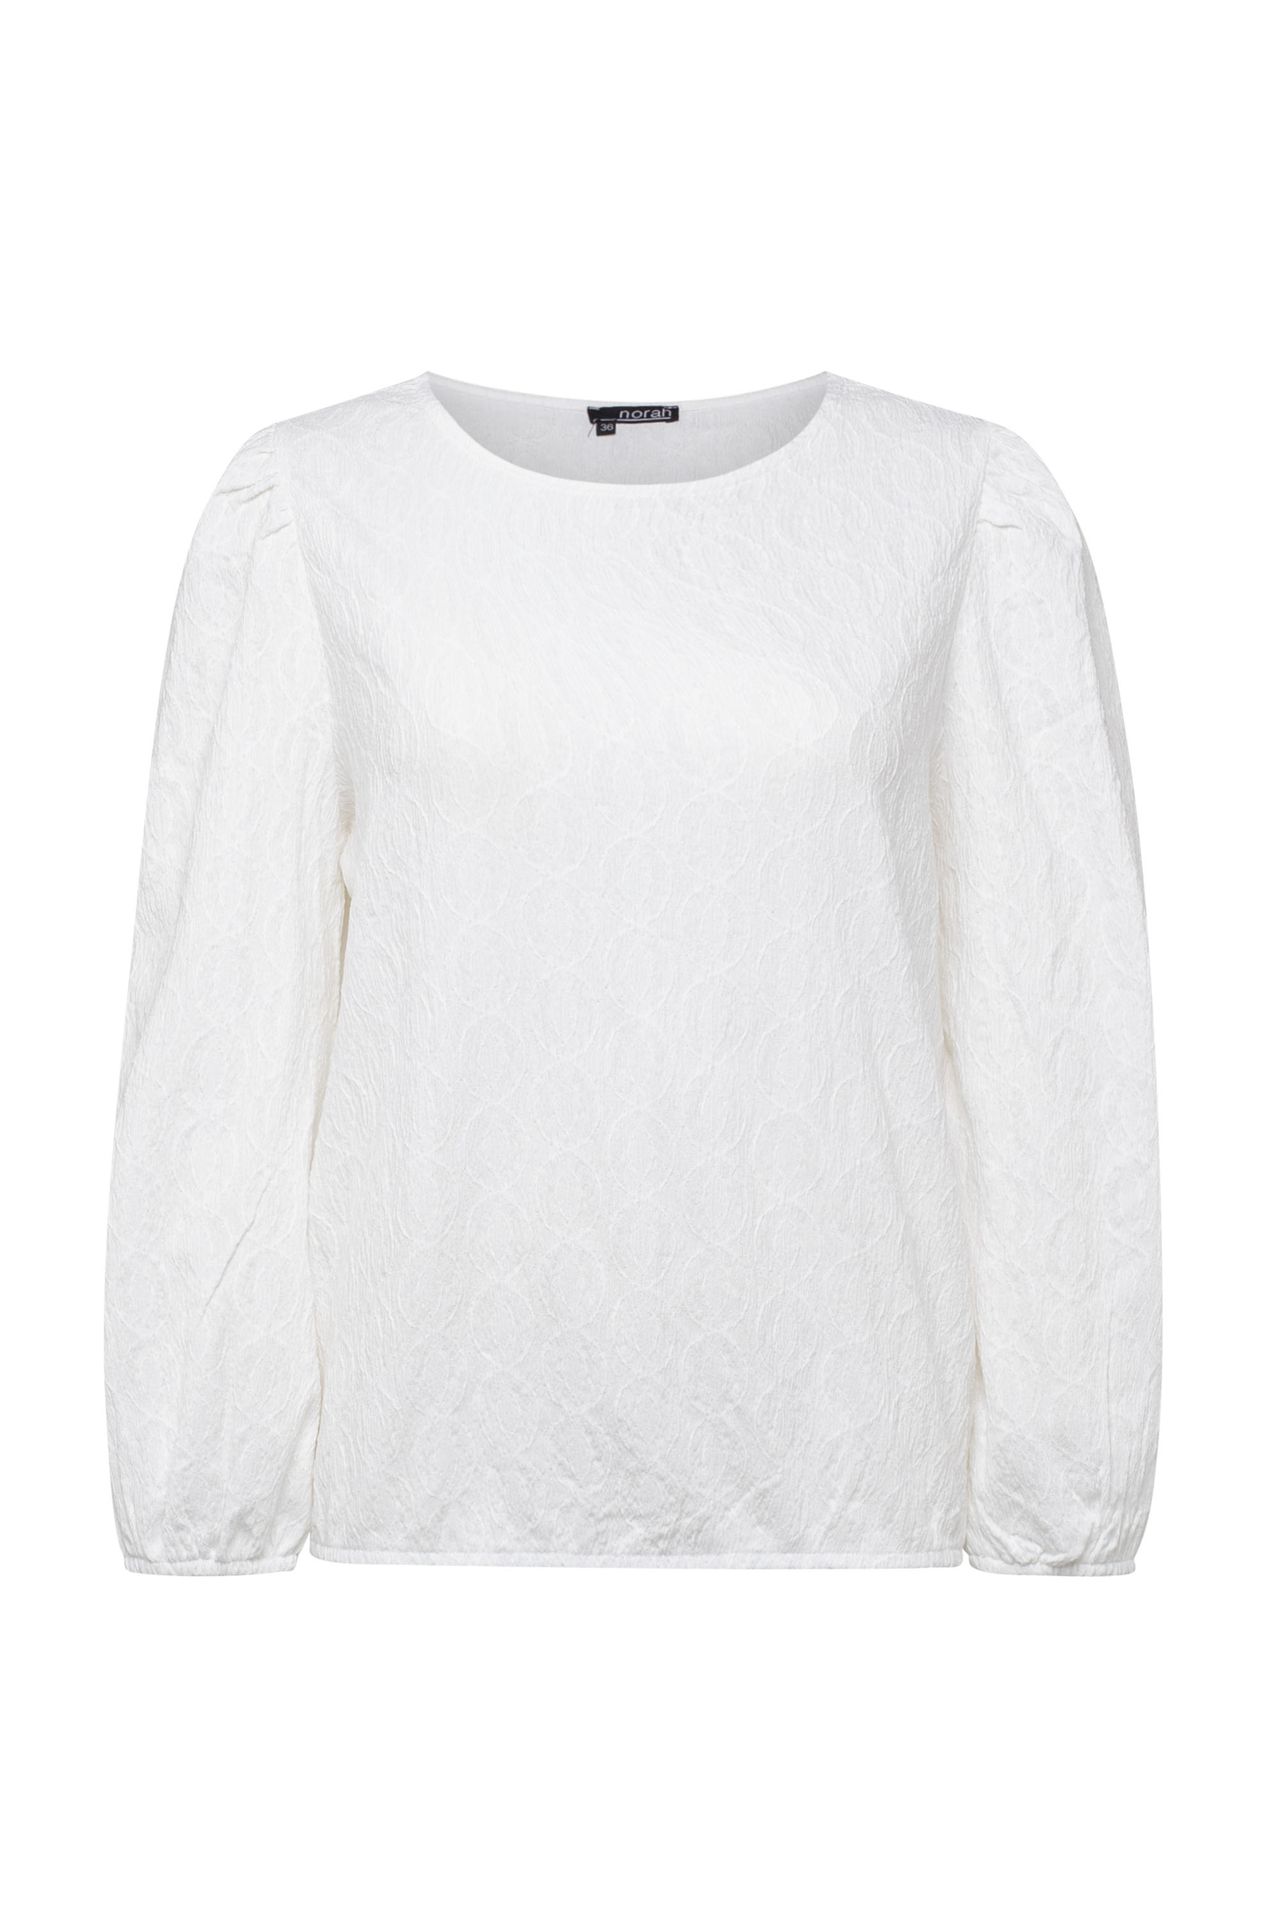 Norah Shirt gebroken wit off-white 213129-101